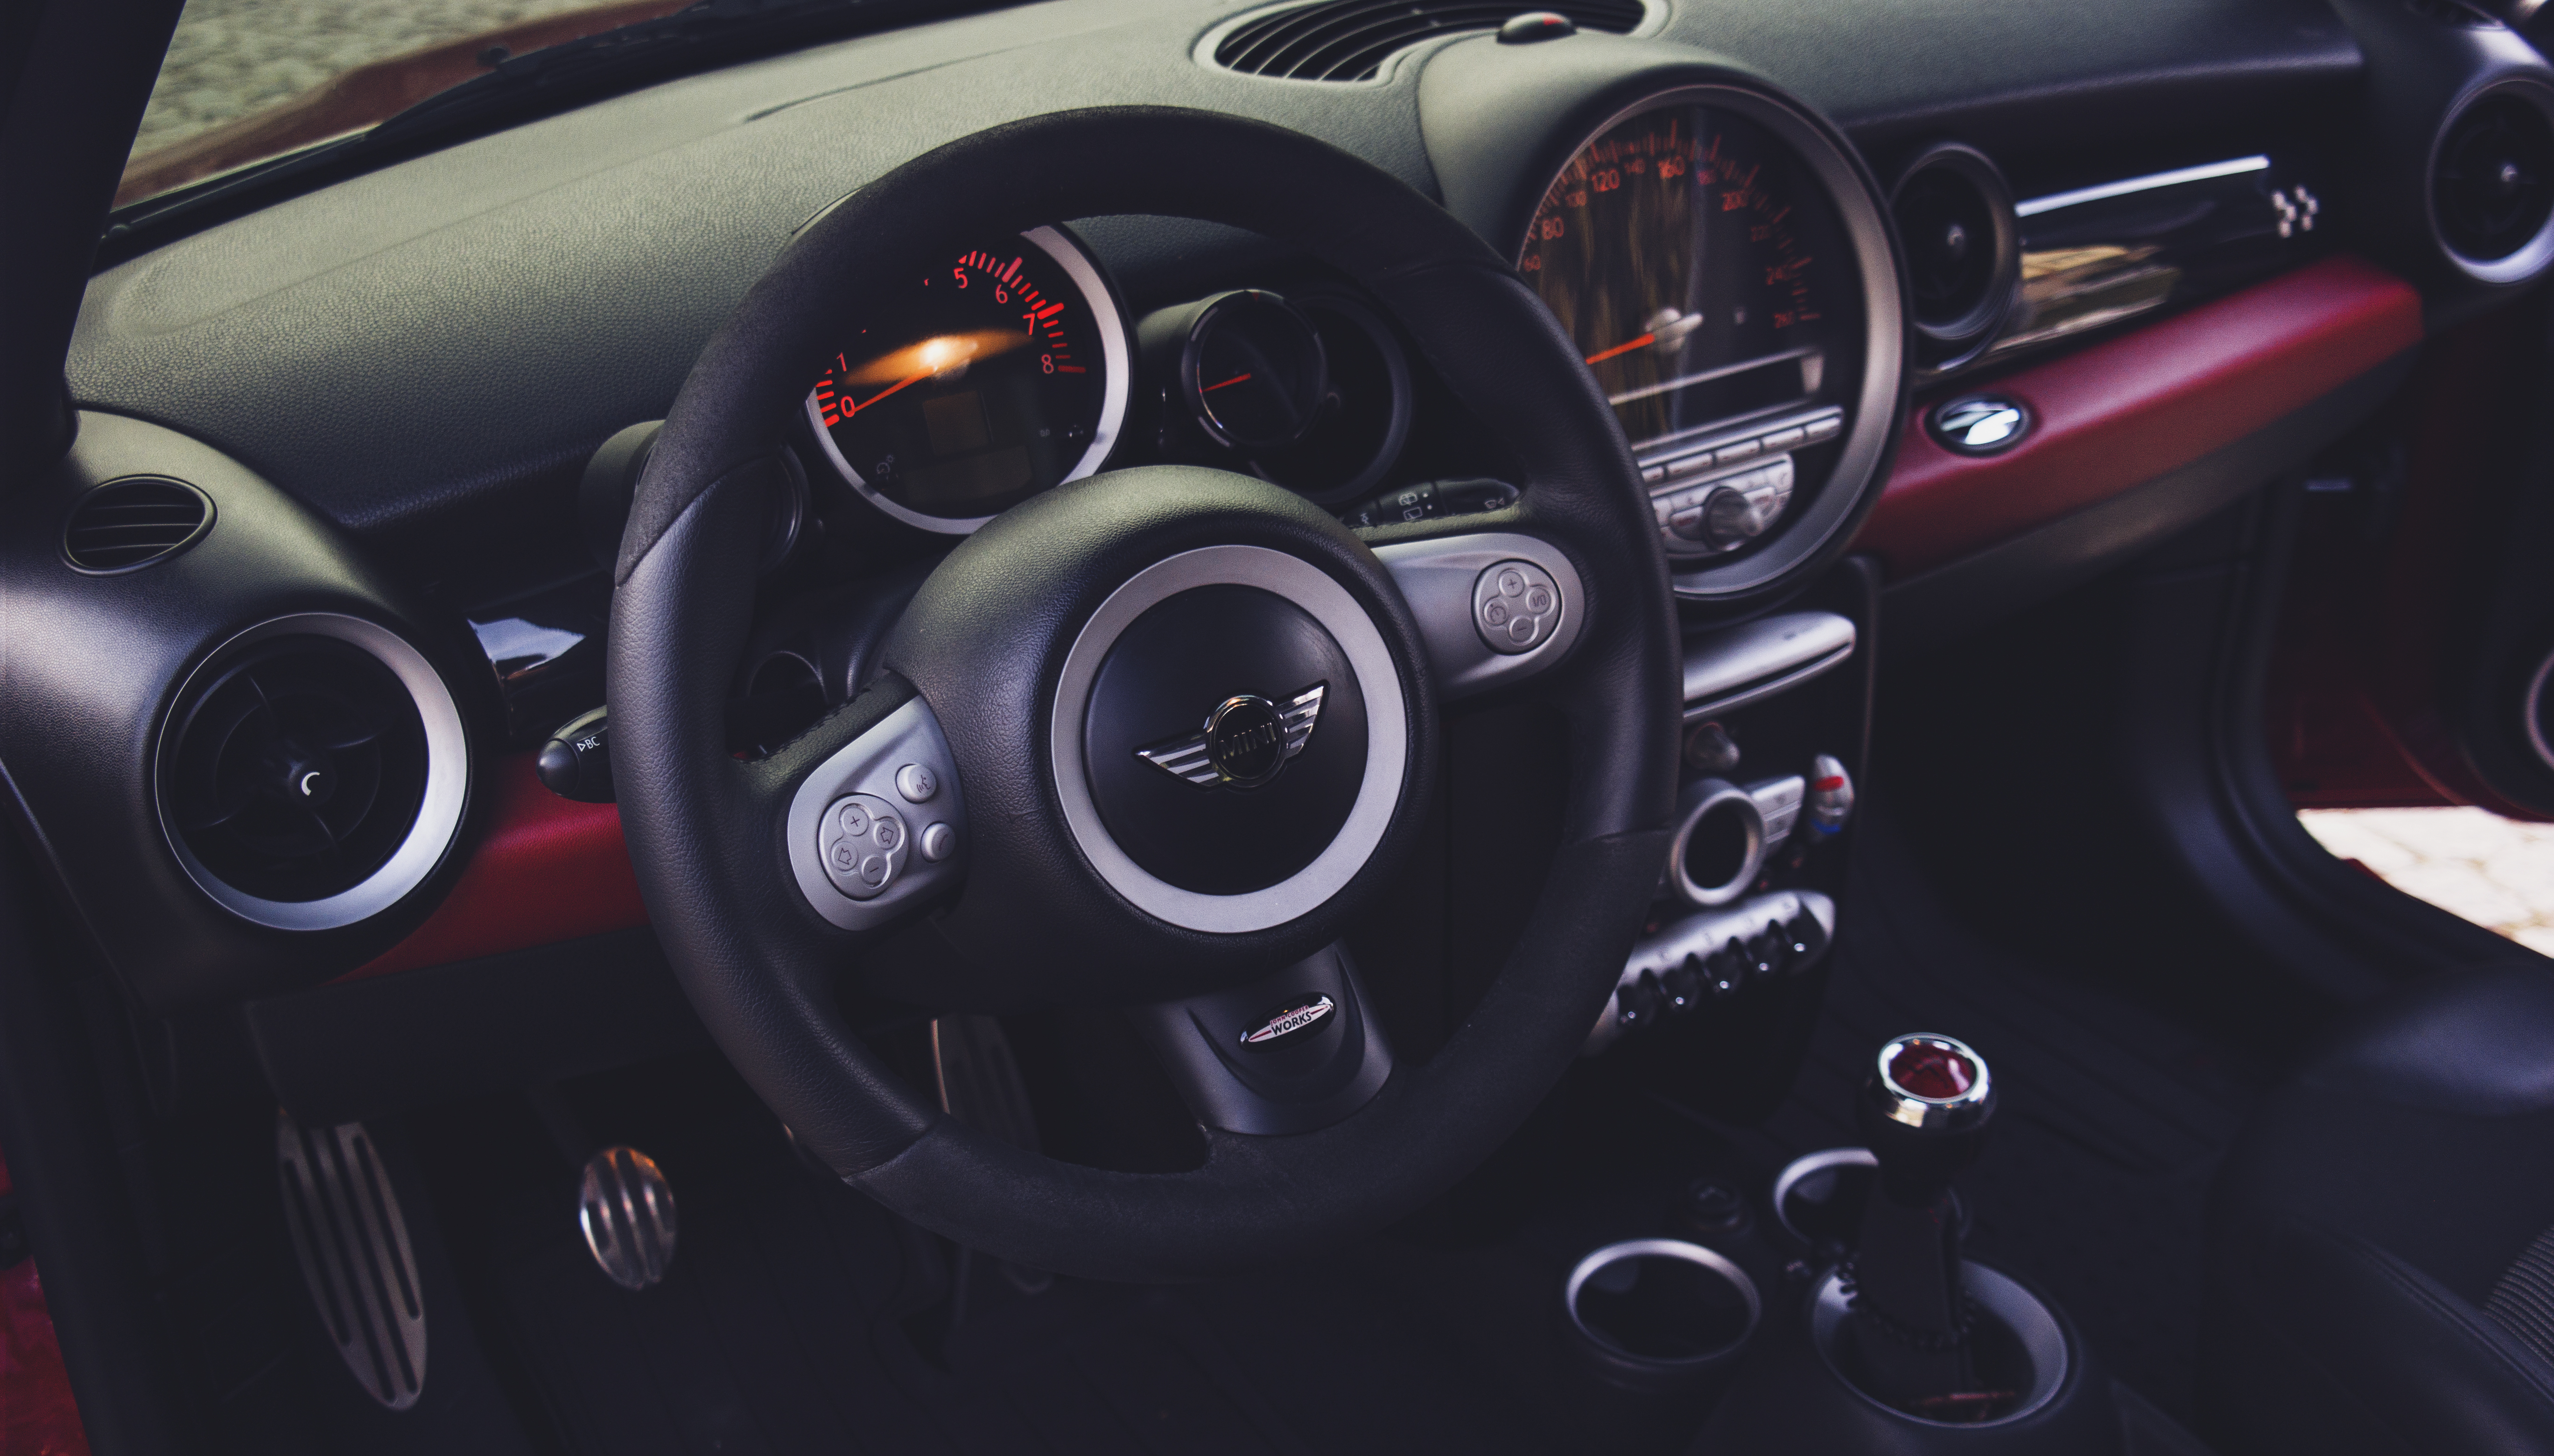 rudder, mini cooper, car interior, cars, steering wheel, vehicle interior Full HD